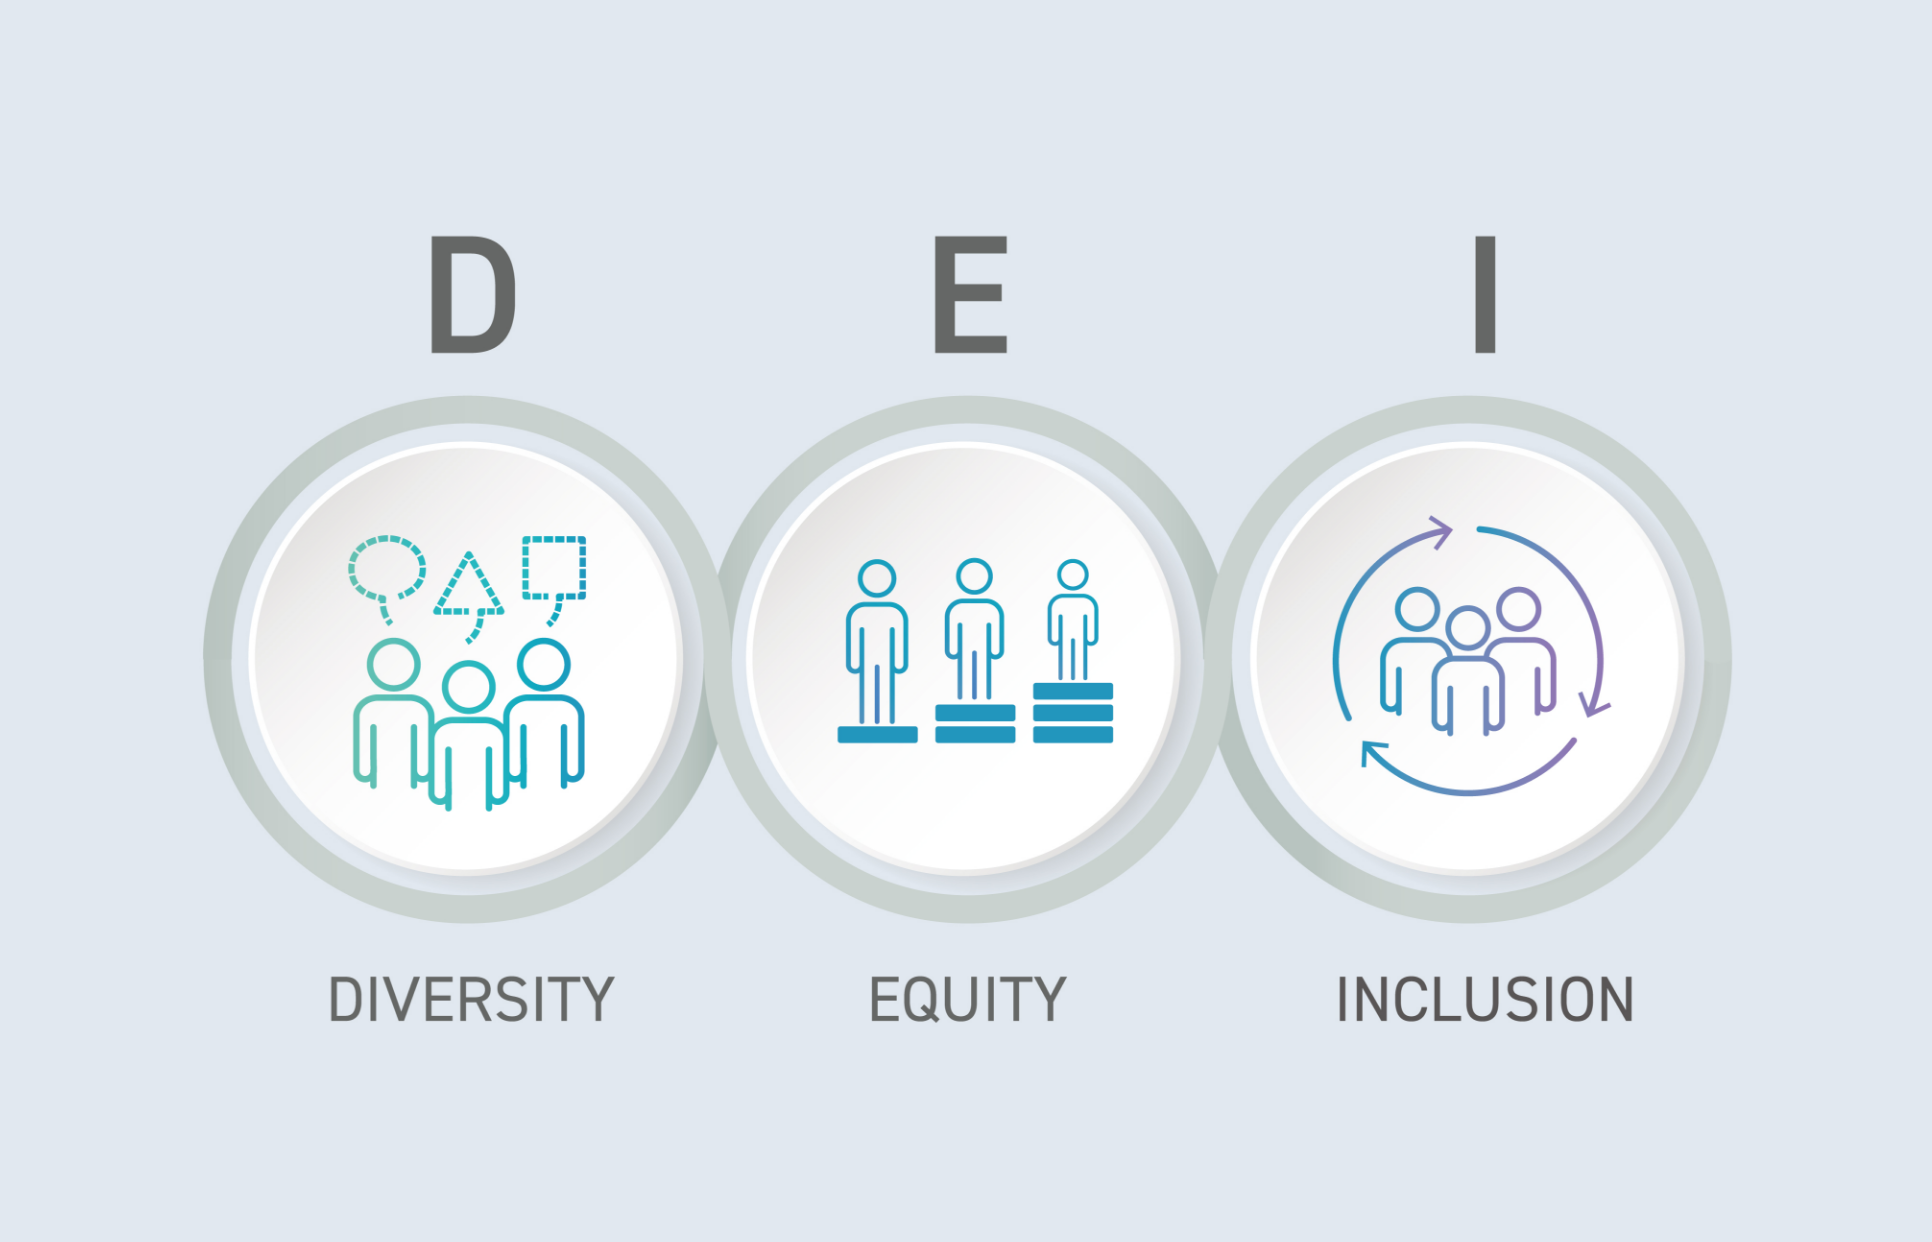 「Diversity」「Equity」「Inclusion」それぞれの概念を表した図